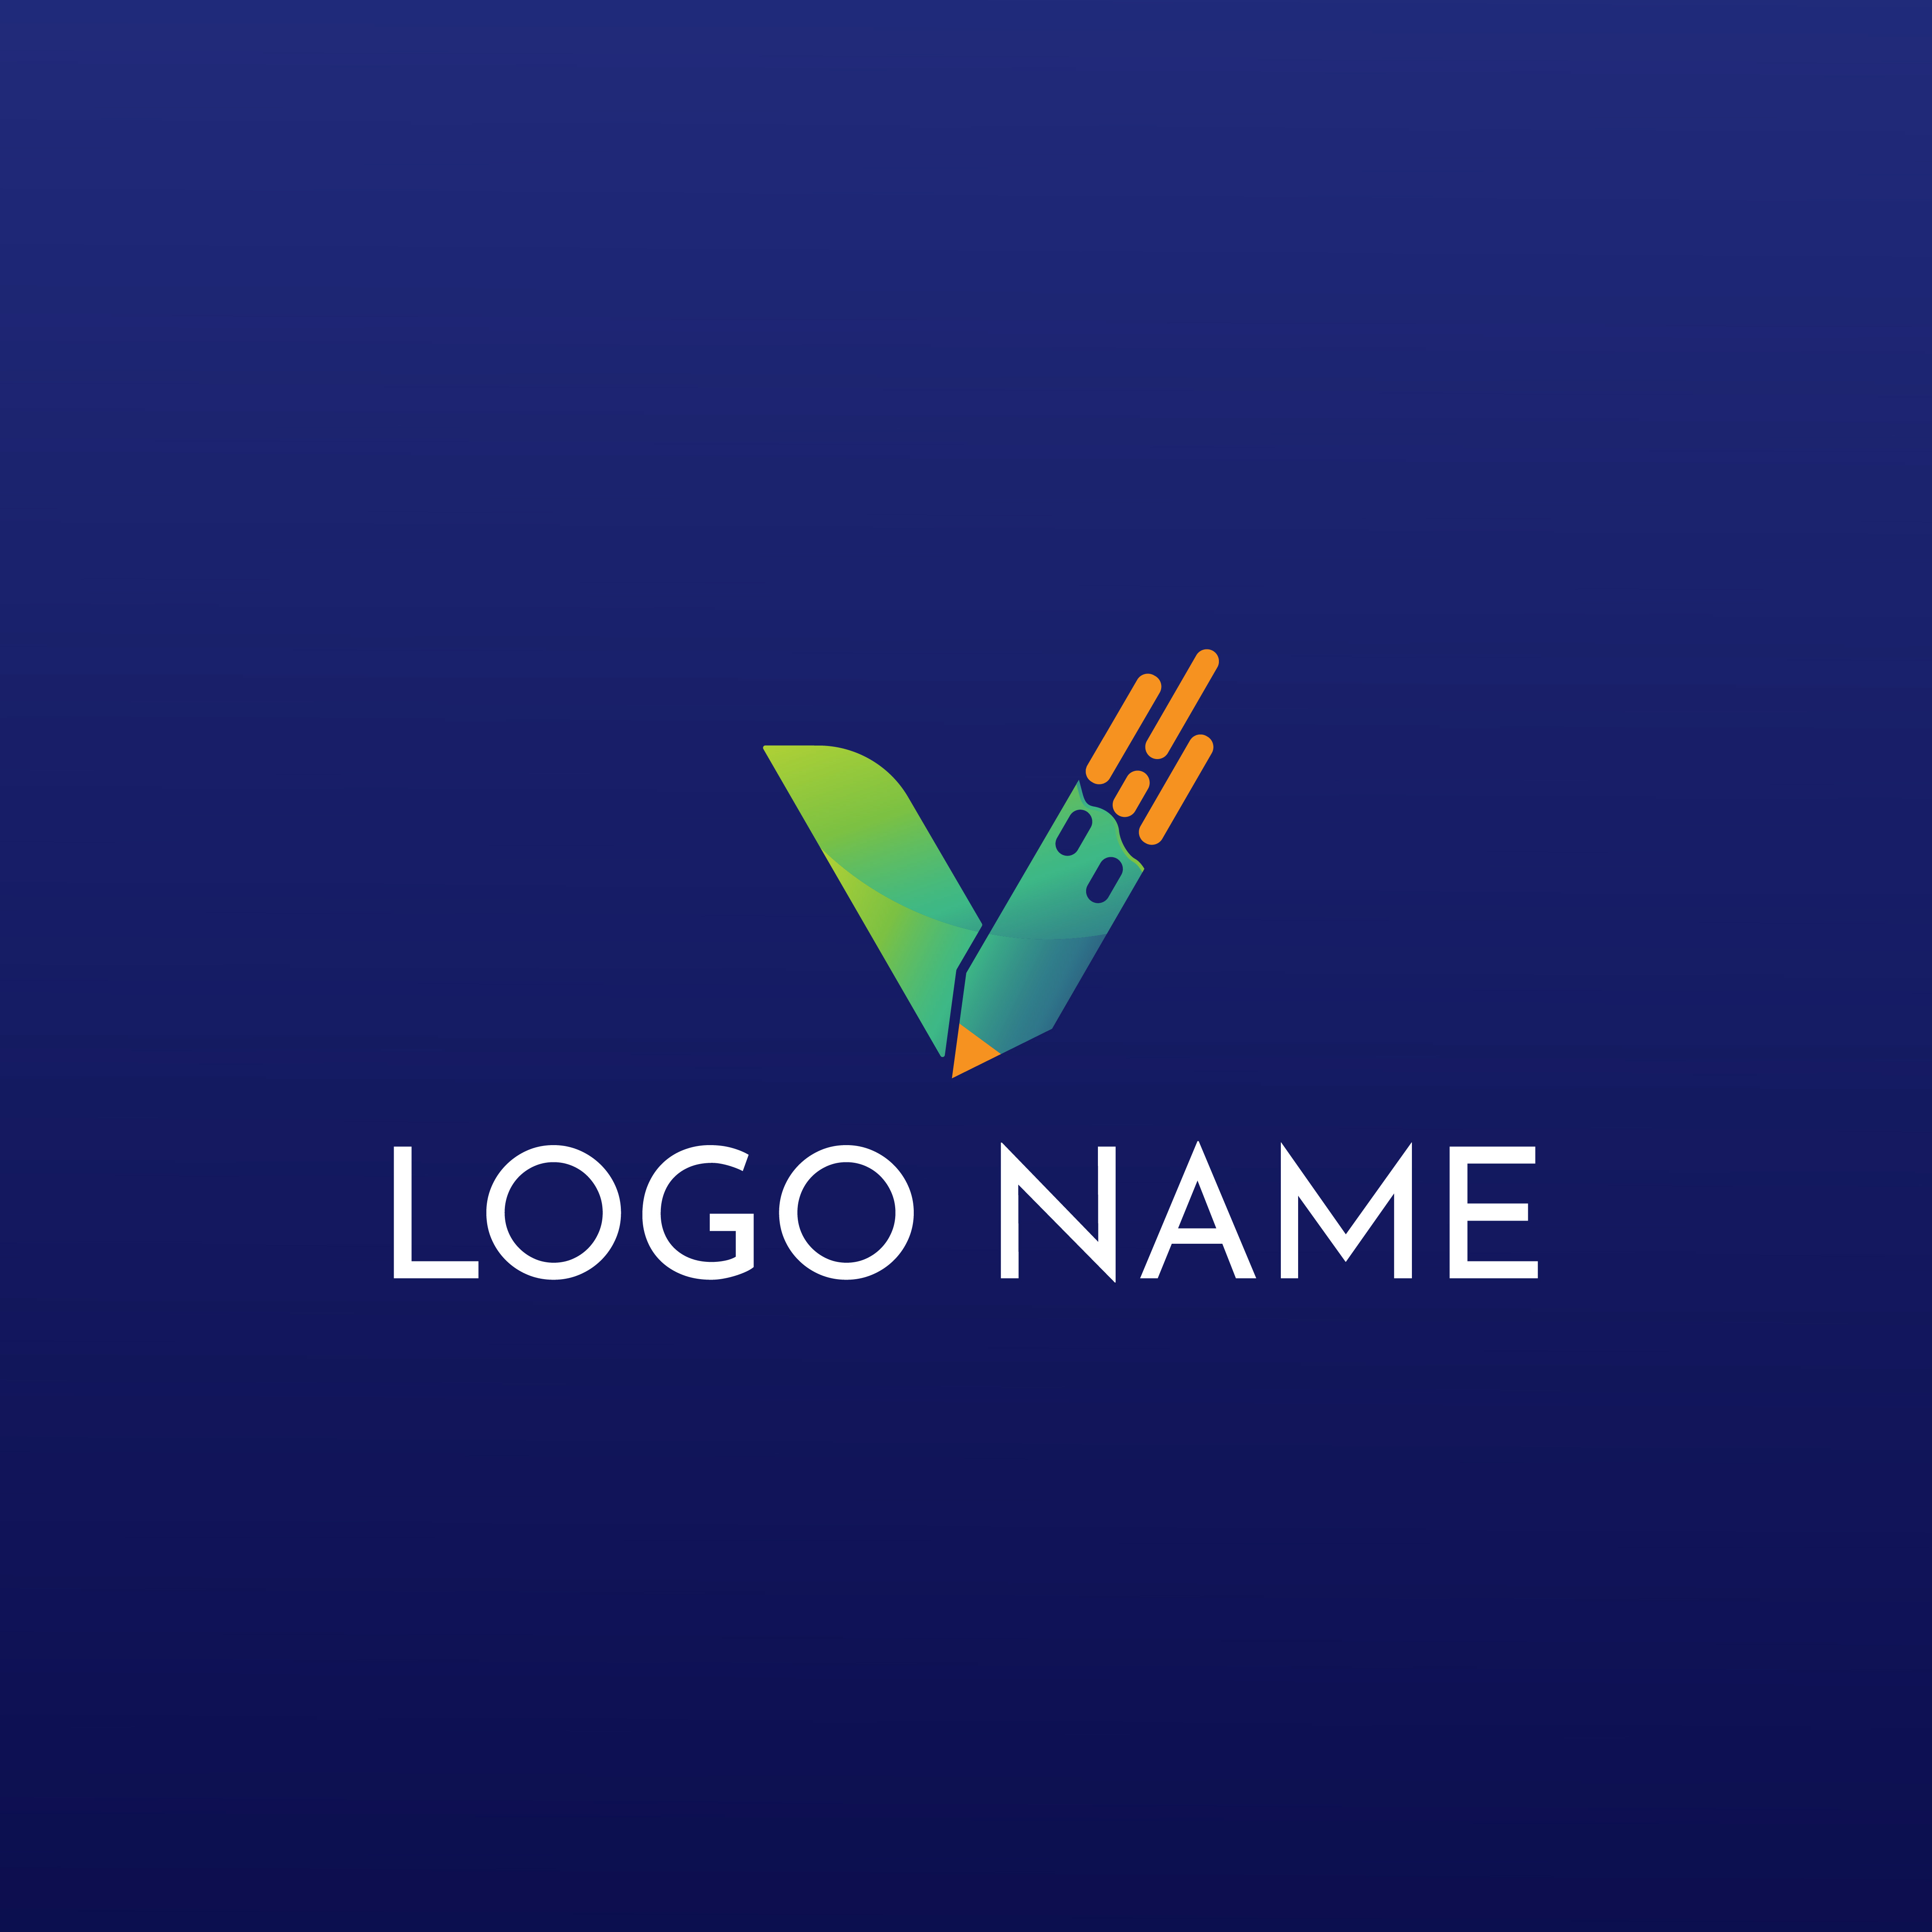 V Letter Logo Design cover image.